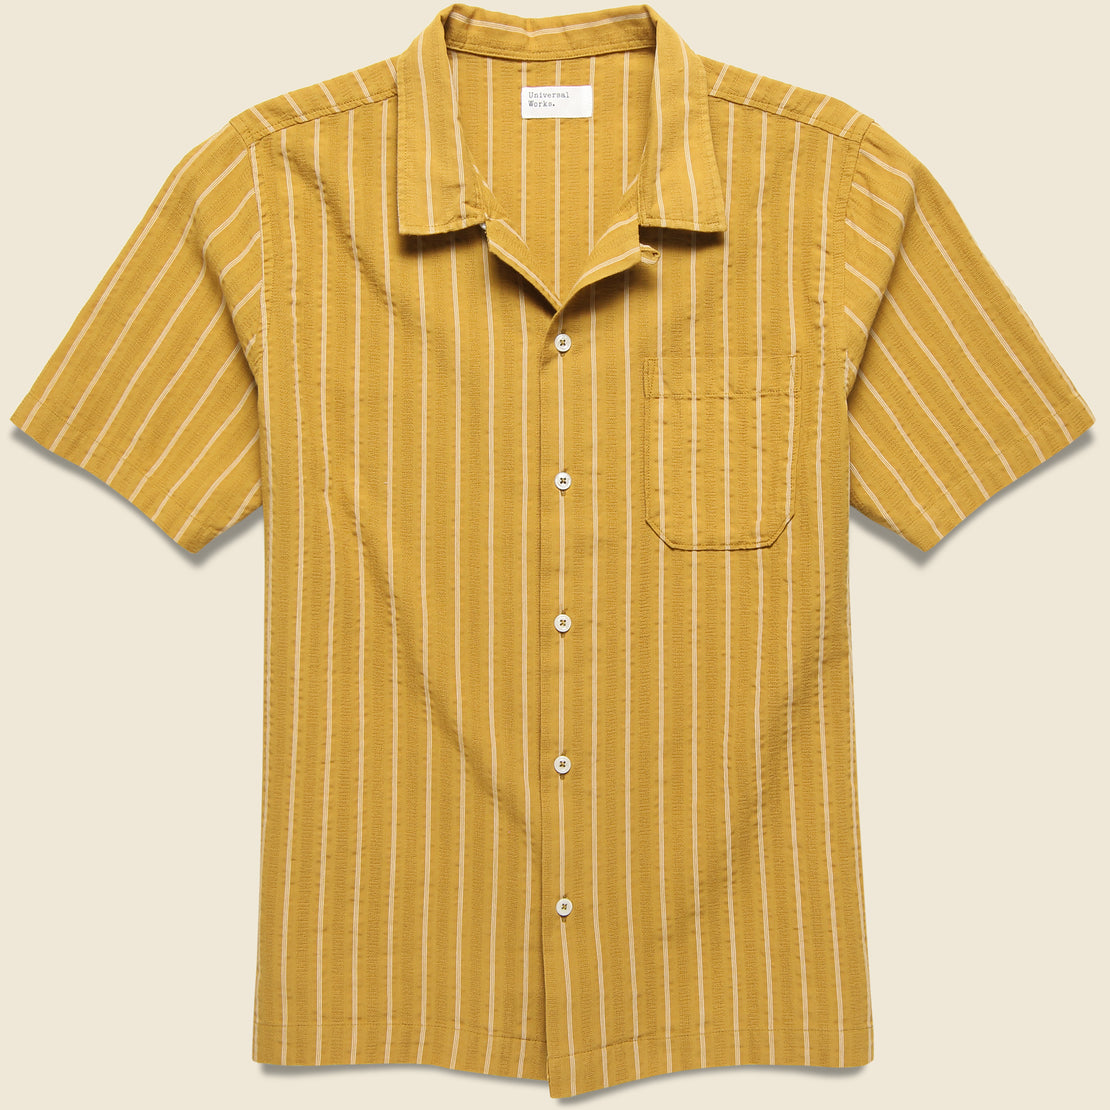 Universal Works Maui Stripe Camp Shirt - Mustard